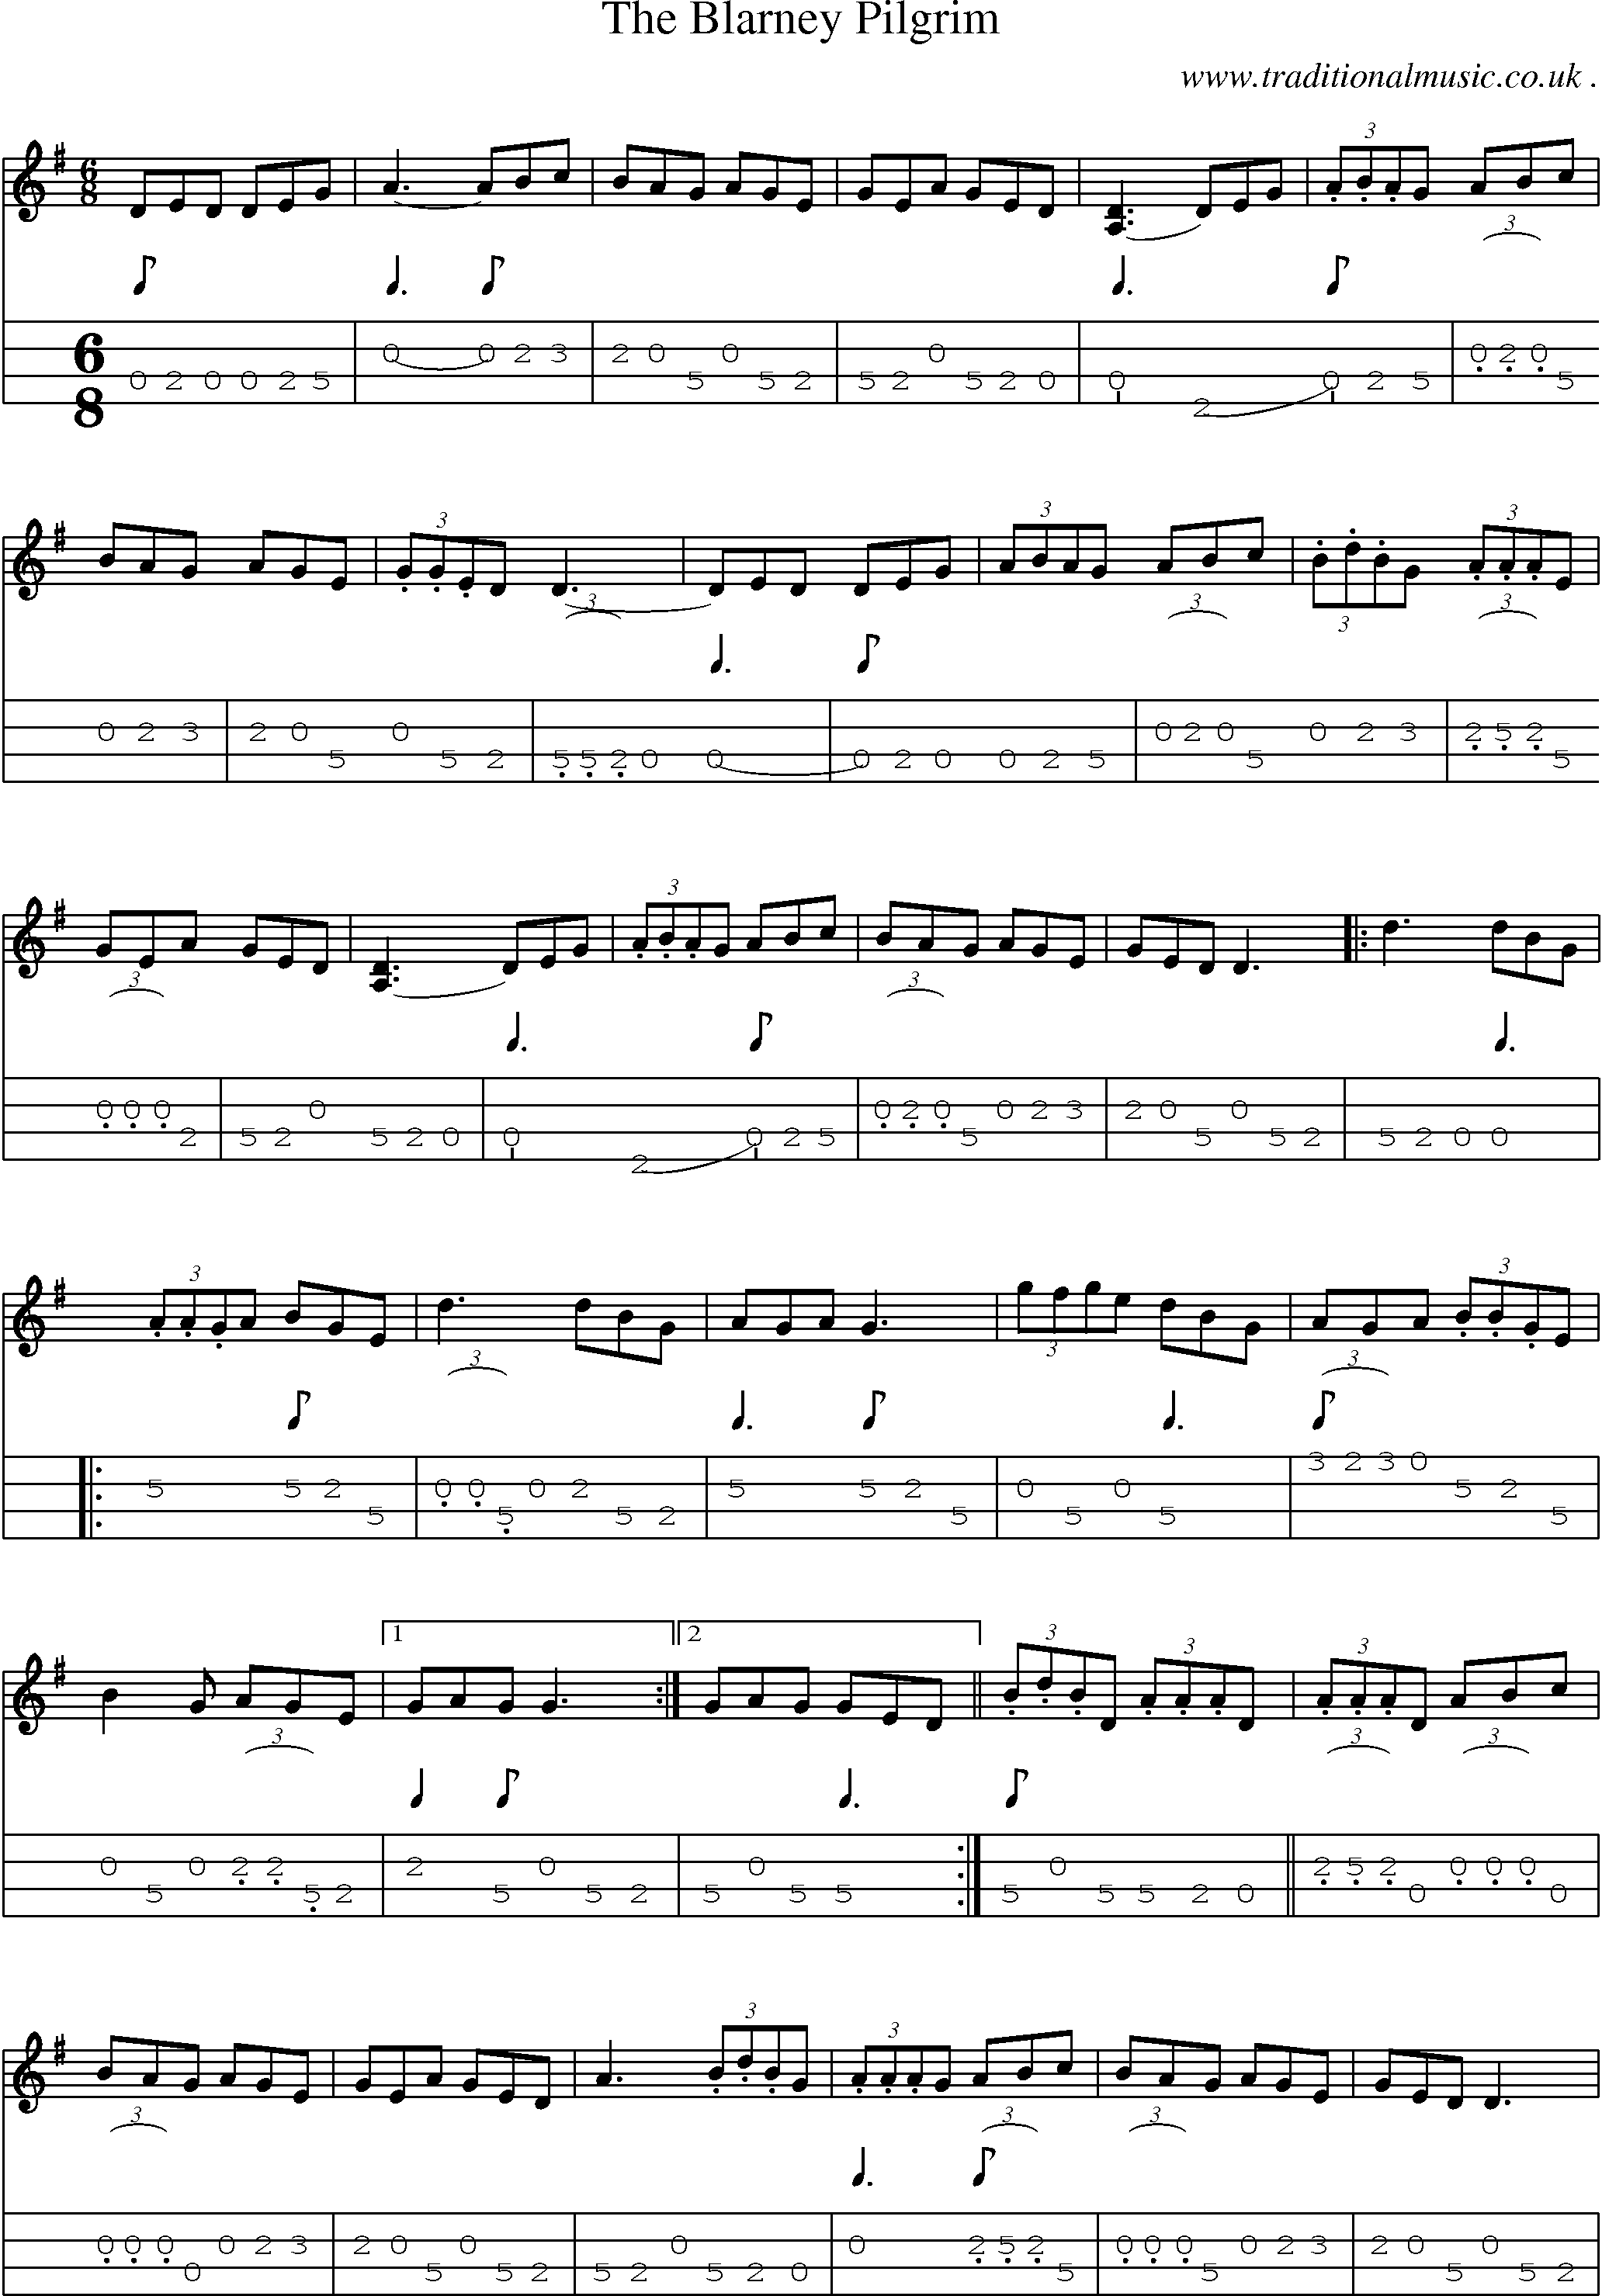 Sheet-Music and Mandolin Tabs for The Blarney Pilgrim